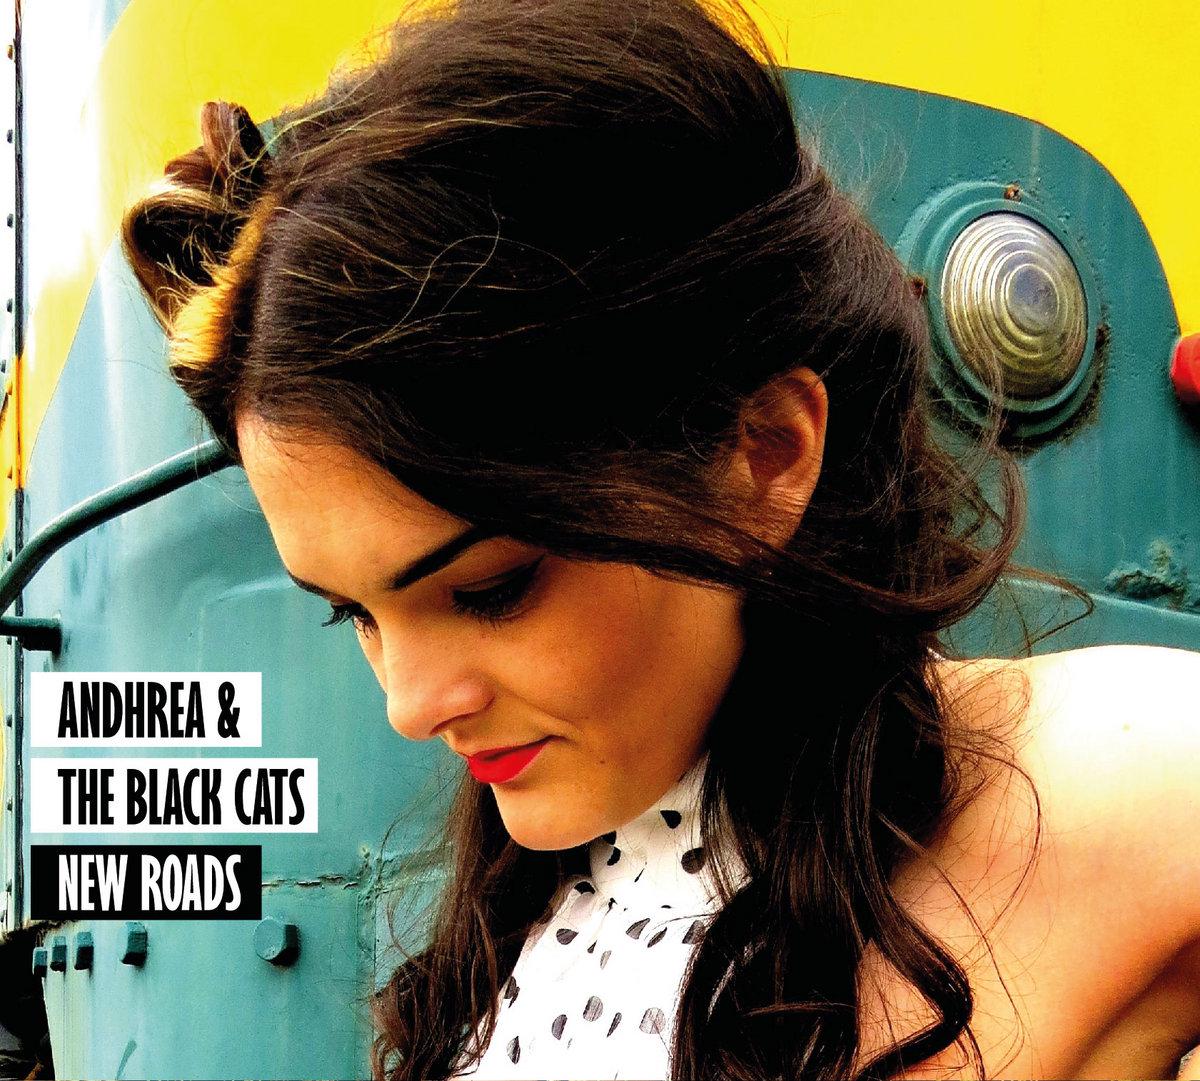 Andhrea & The Black Cats